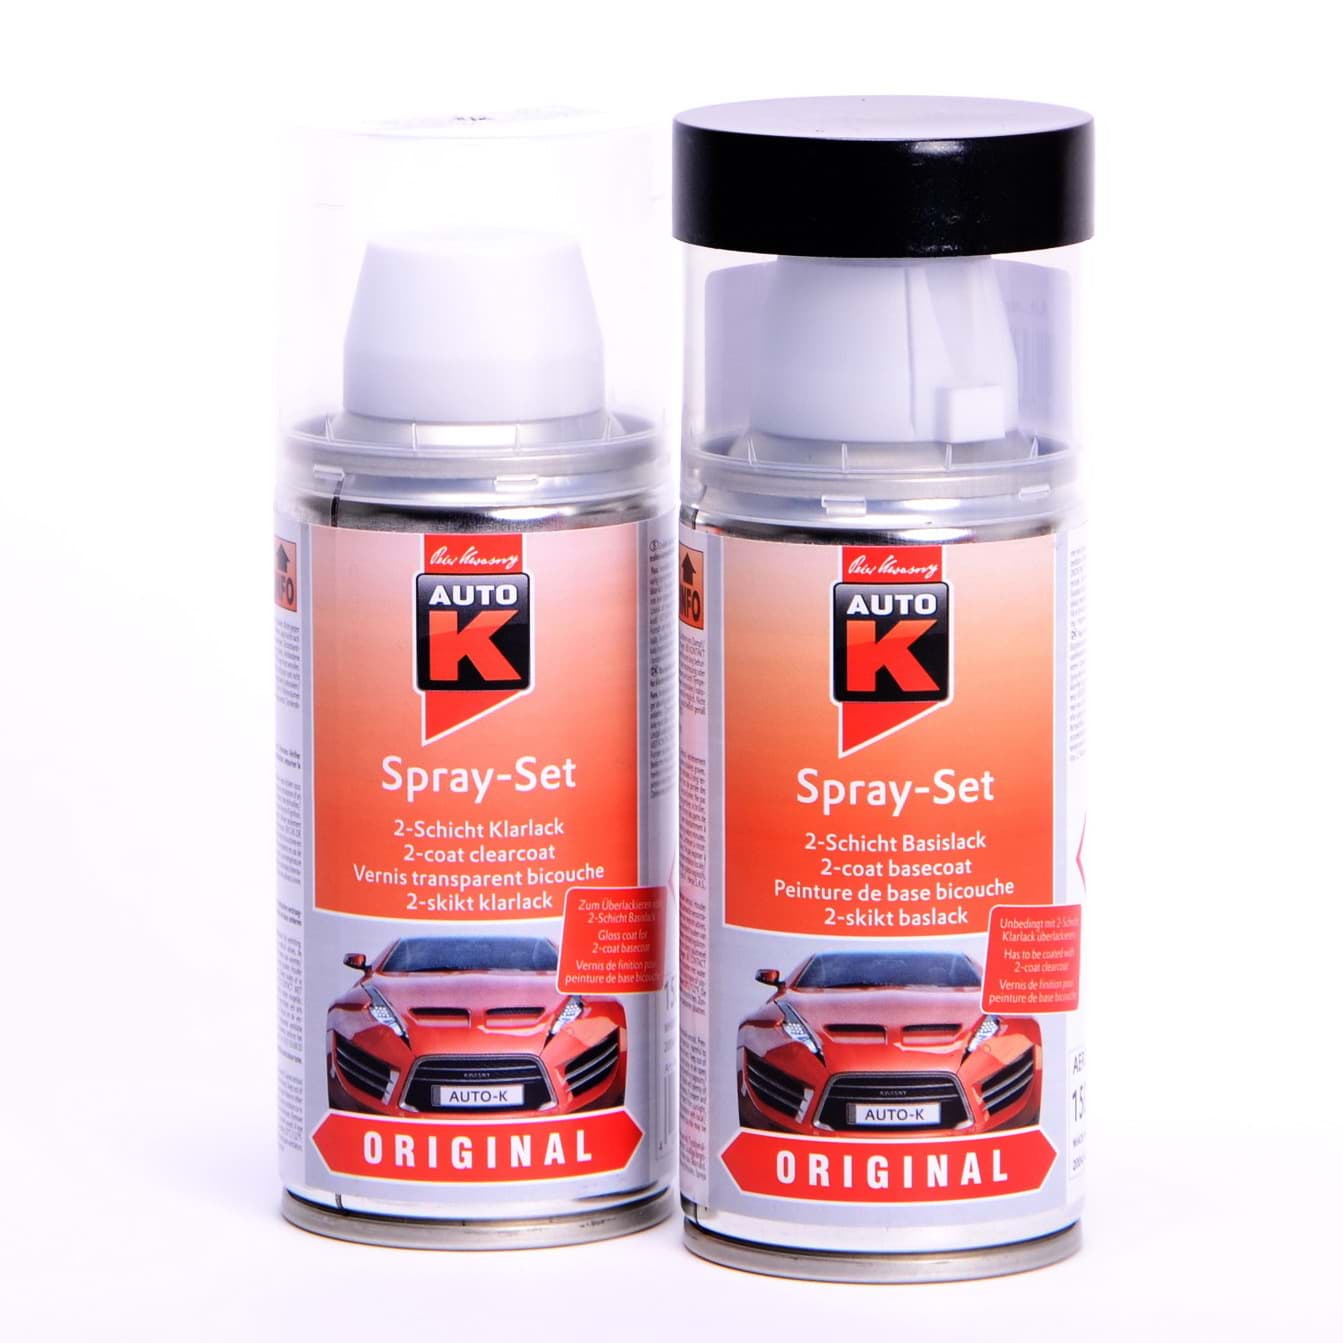 Afbeelding van Auto-K Spray-Set Autolack für Opel 265 Techviolett met 21360